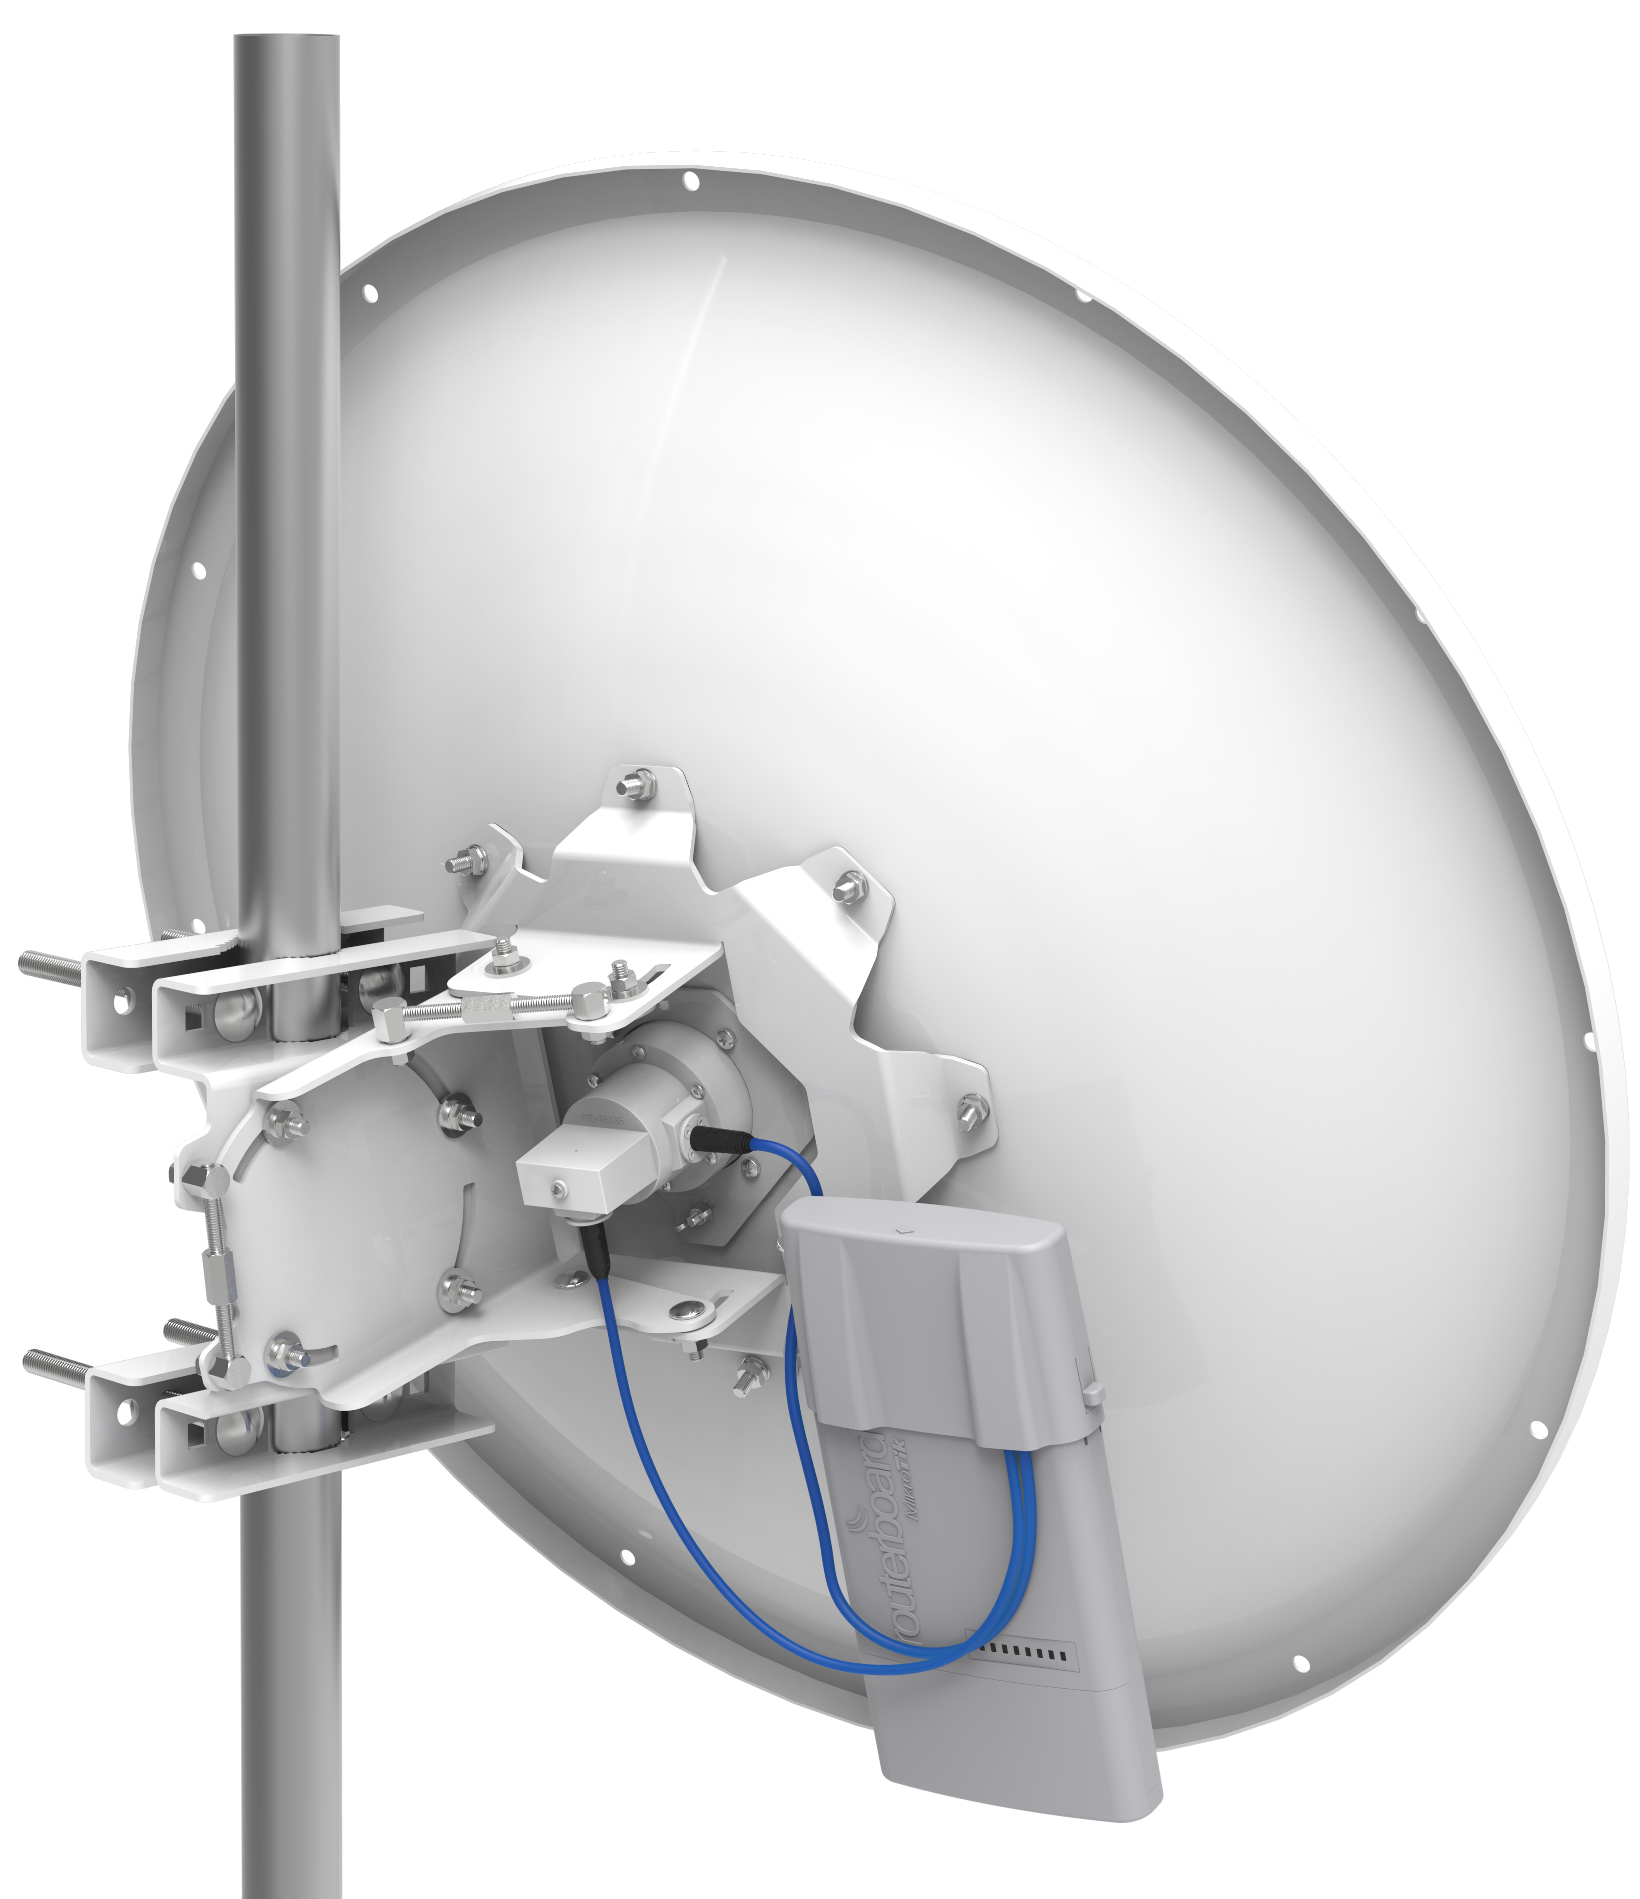 MIKROTIK  (mANT30 PA) Antena direccional 4.7 - 5.8 GHz, 30dBi de ganancia conector SMA Hembra. Con montaje de alineación de precisión